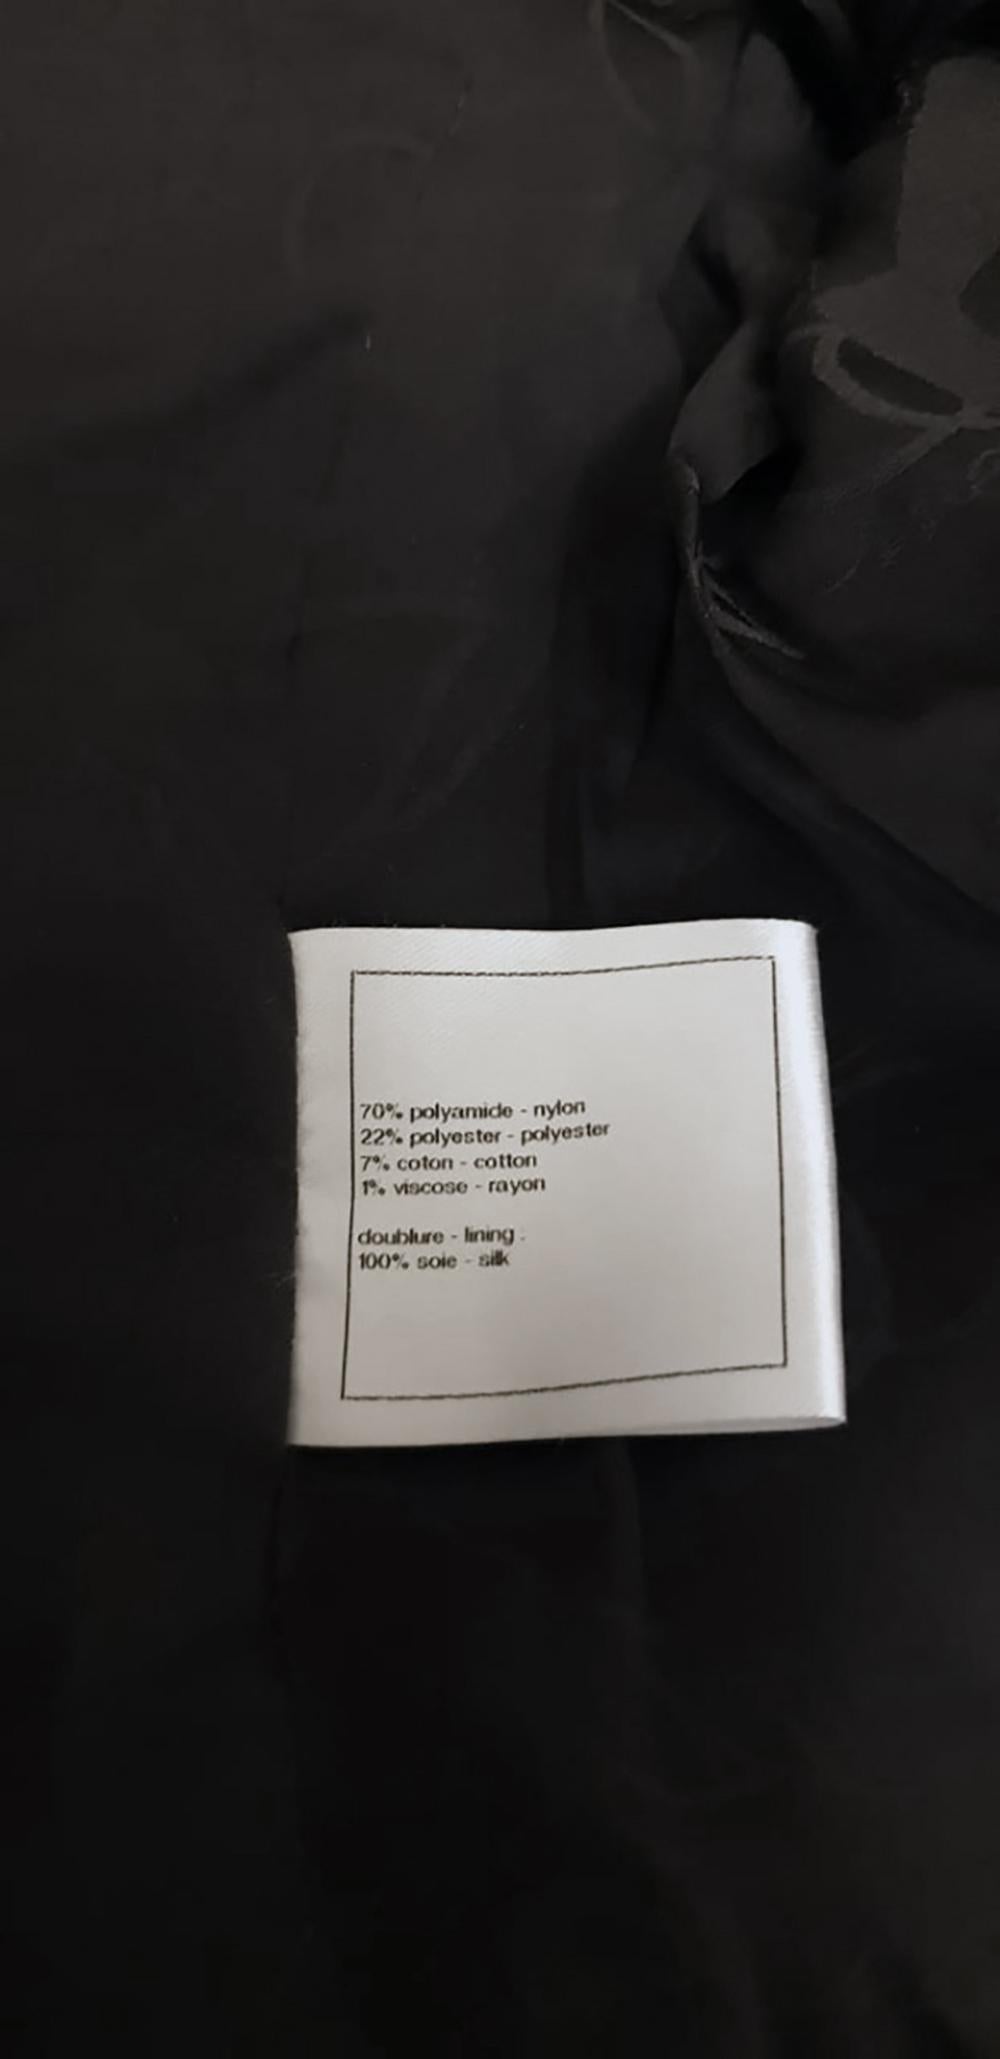 Chanel Iconic Fashion Manifesto Tie Dye Jacket 9